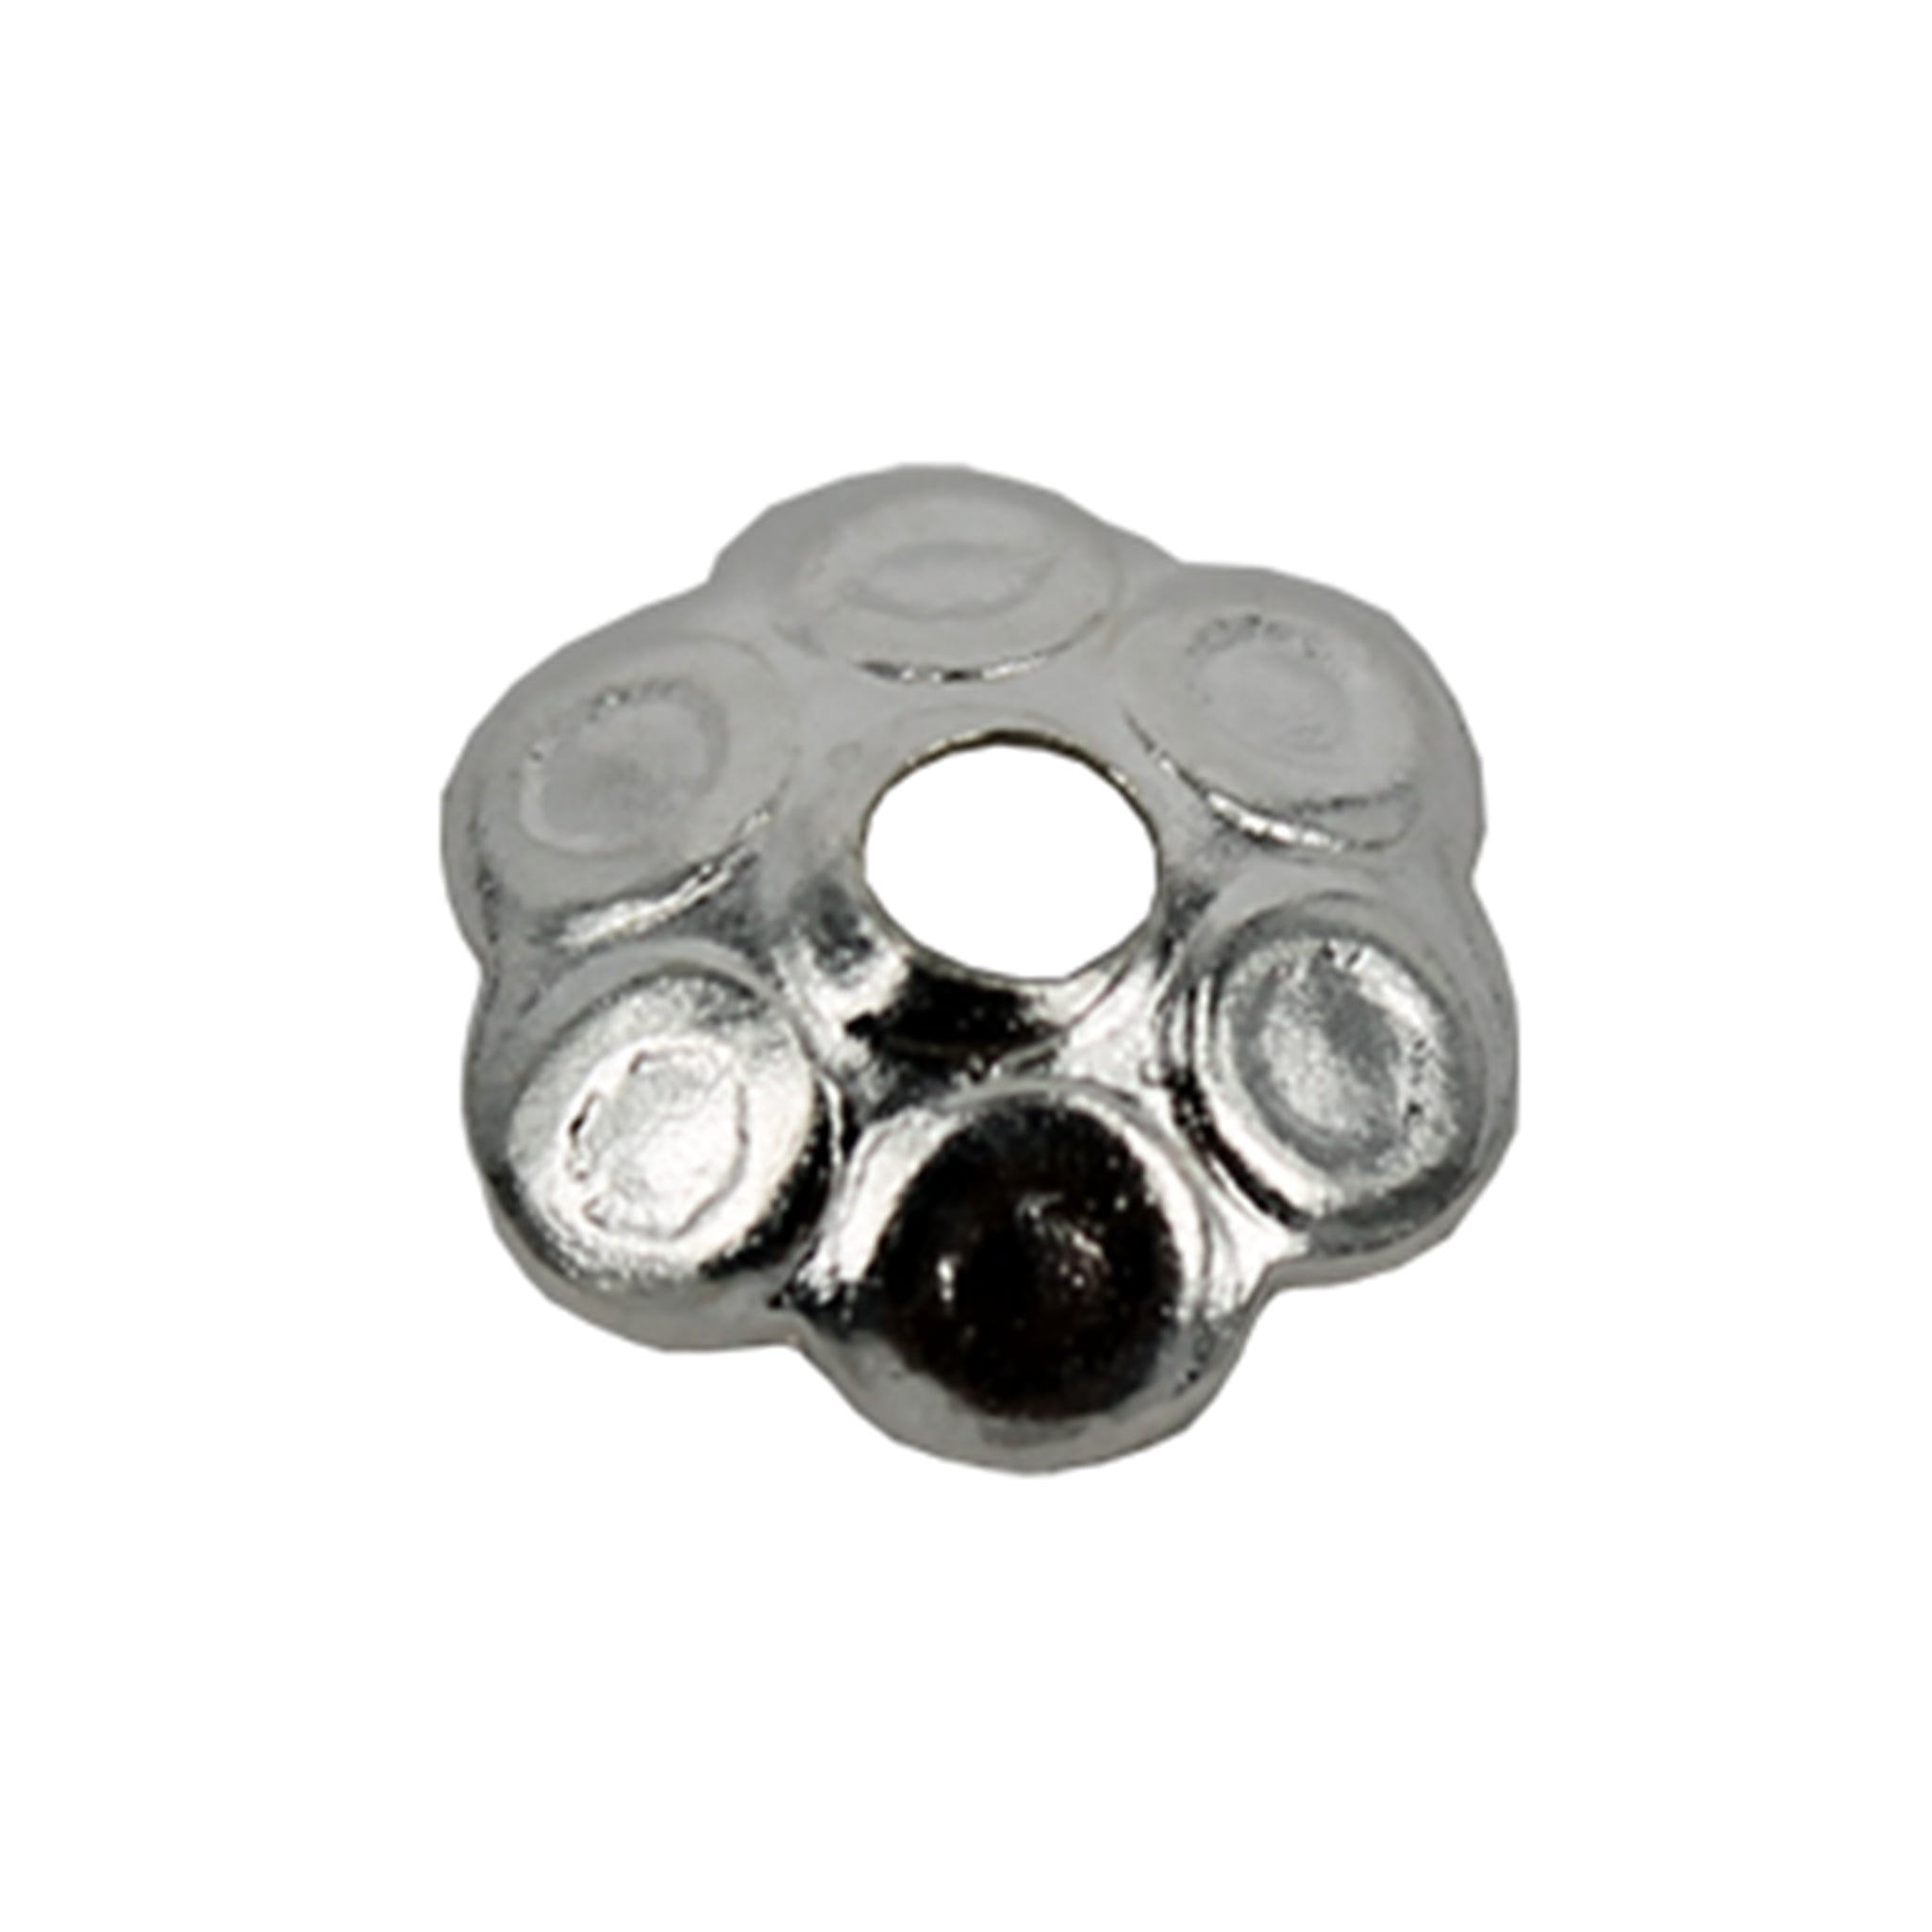 Flower Bead Cap in Sterling Silver 9.06mm